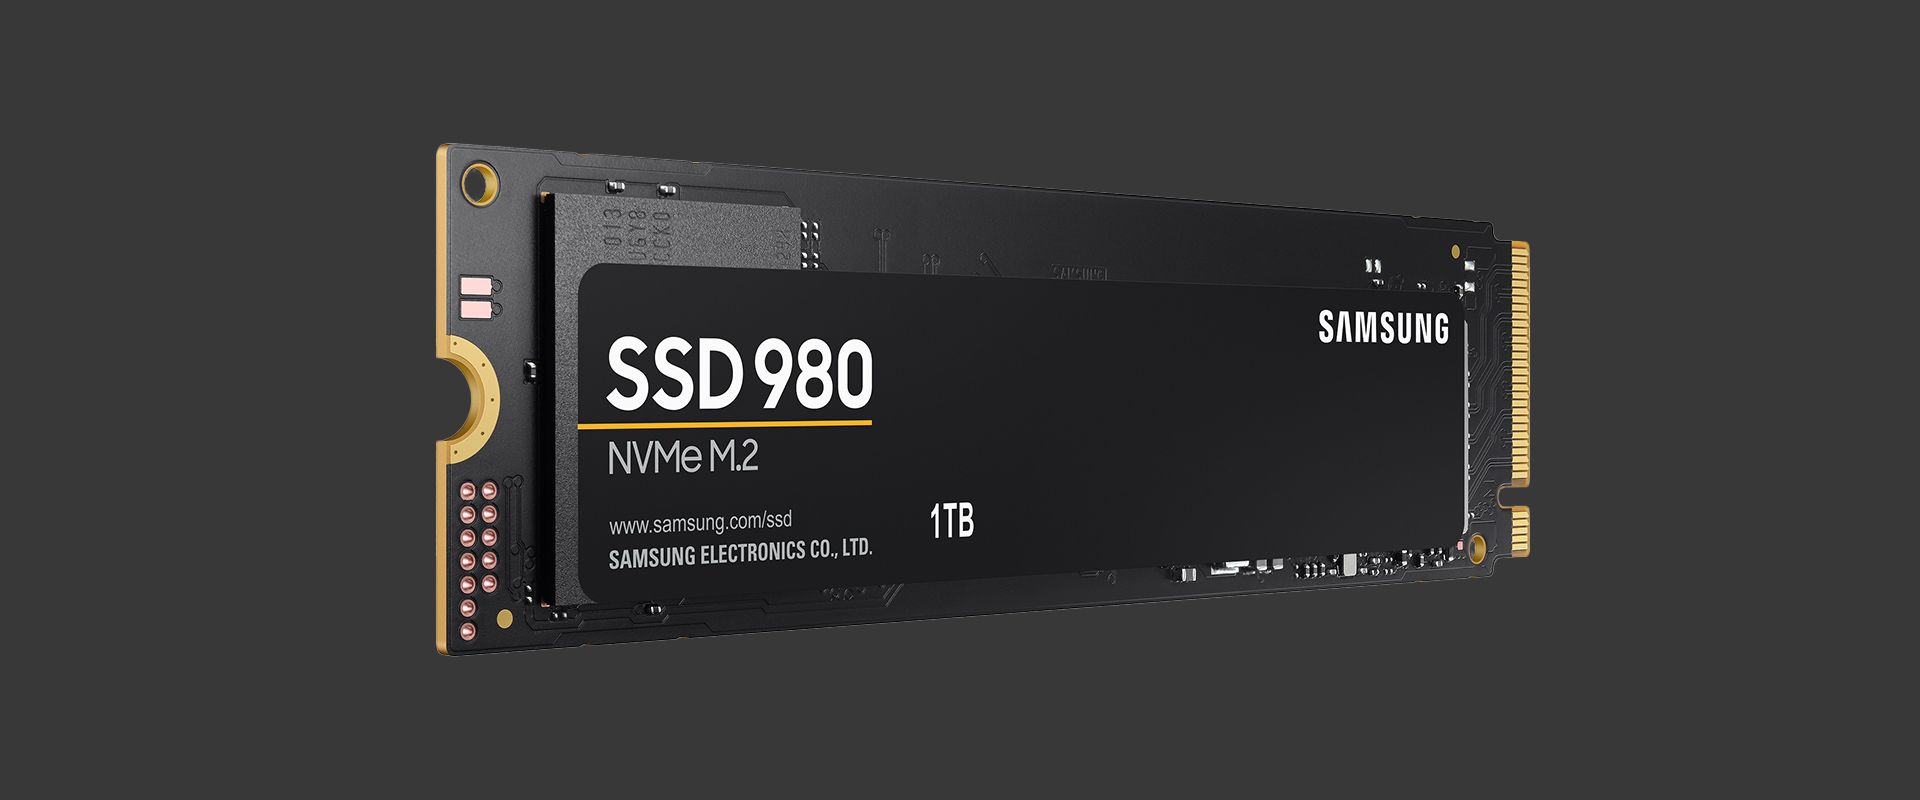 Dysk SSD Samsung 980 NVMe - Nowosciproduktowe.pl